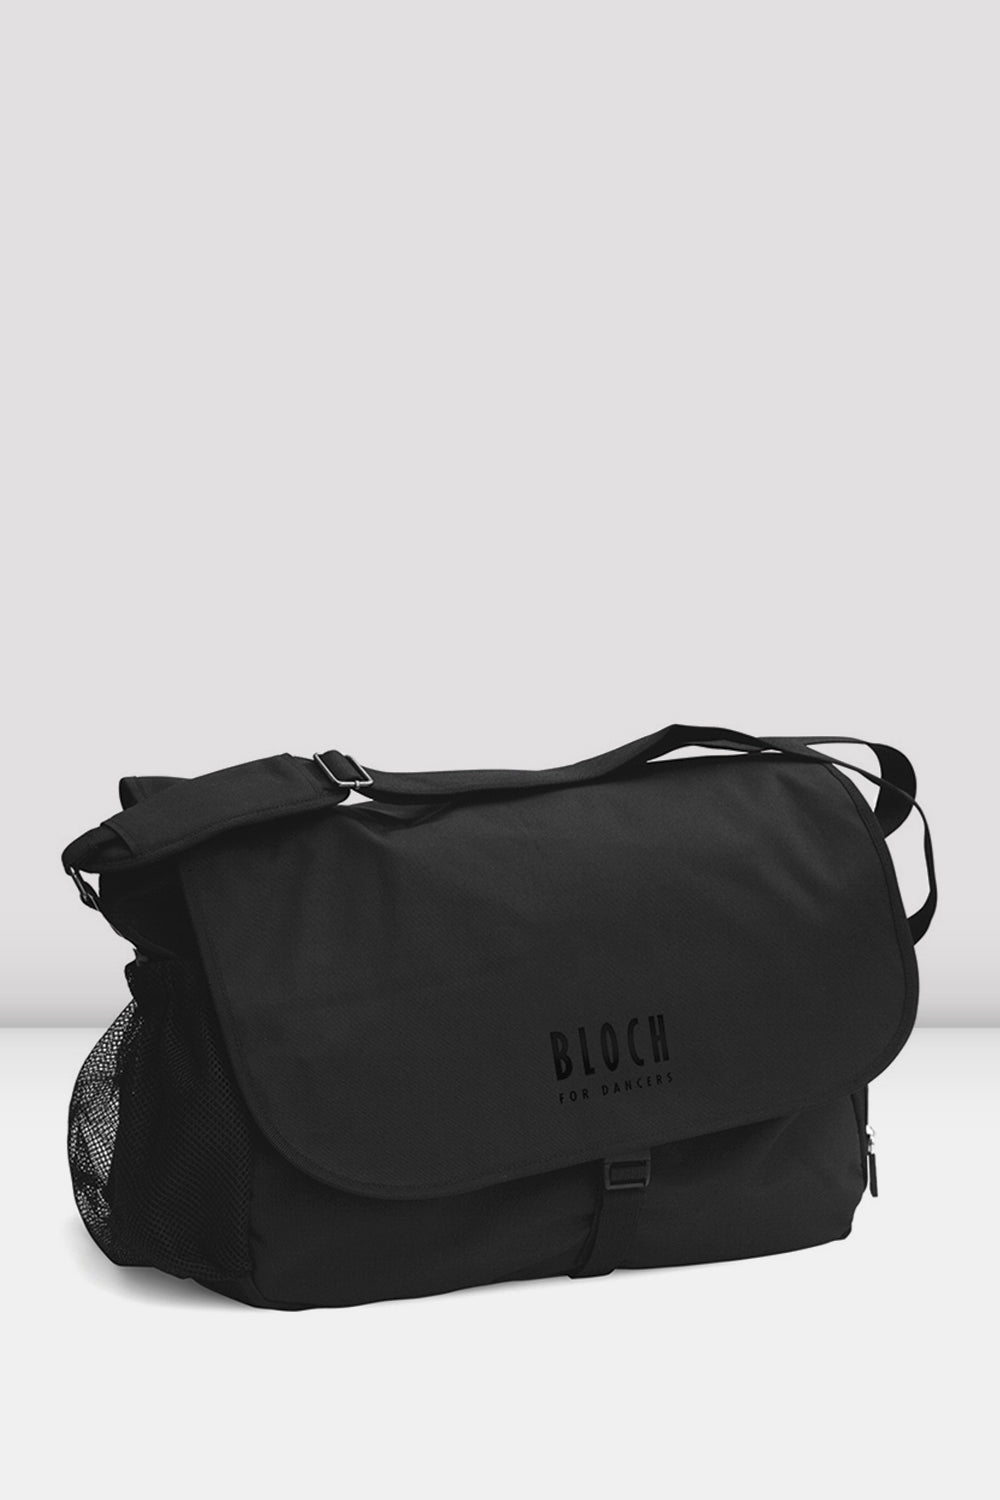 BLOCH Dance Bag, Black Nylon